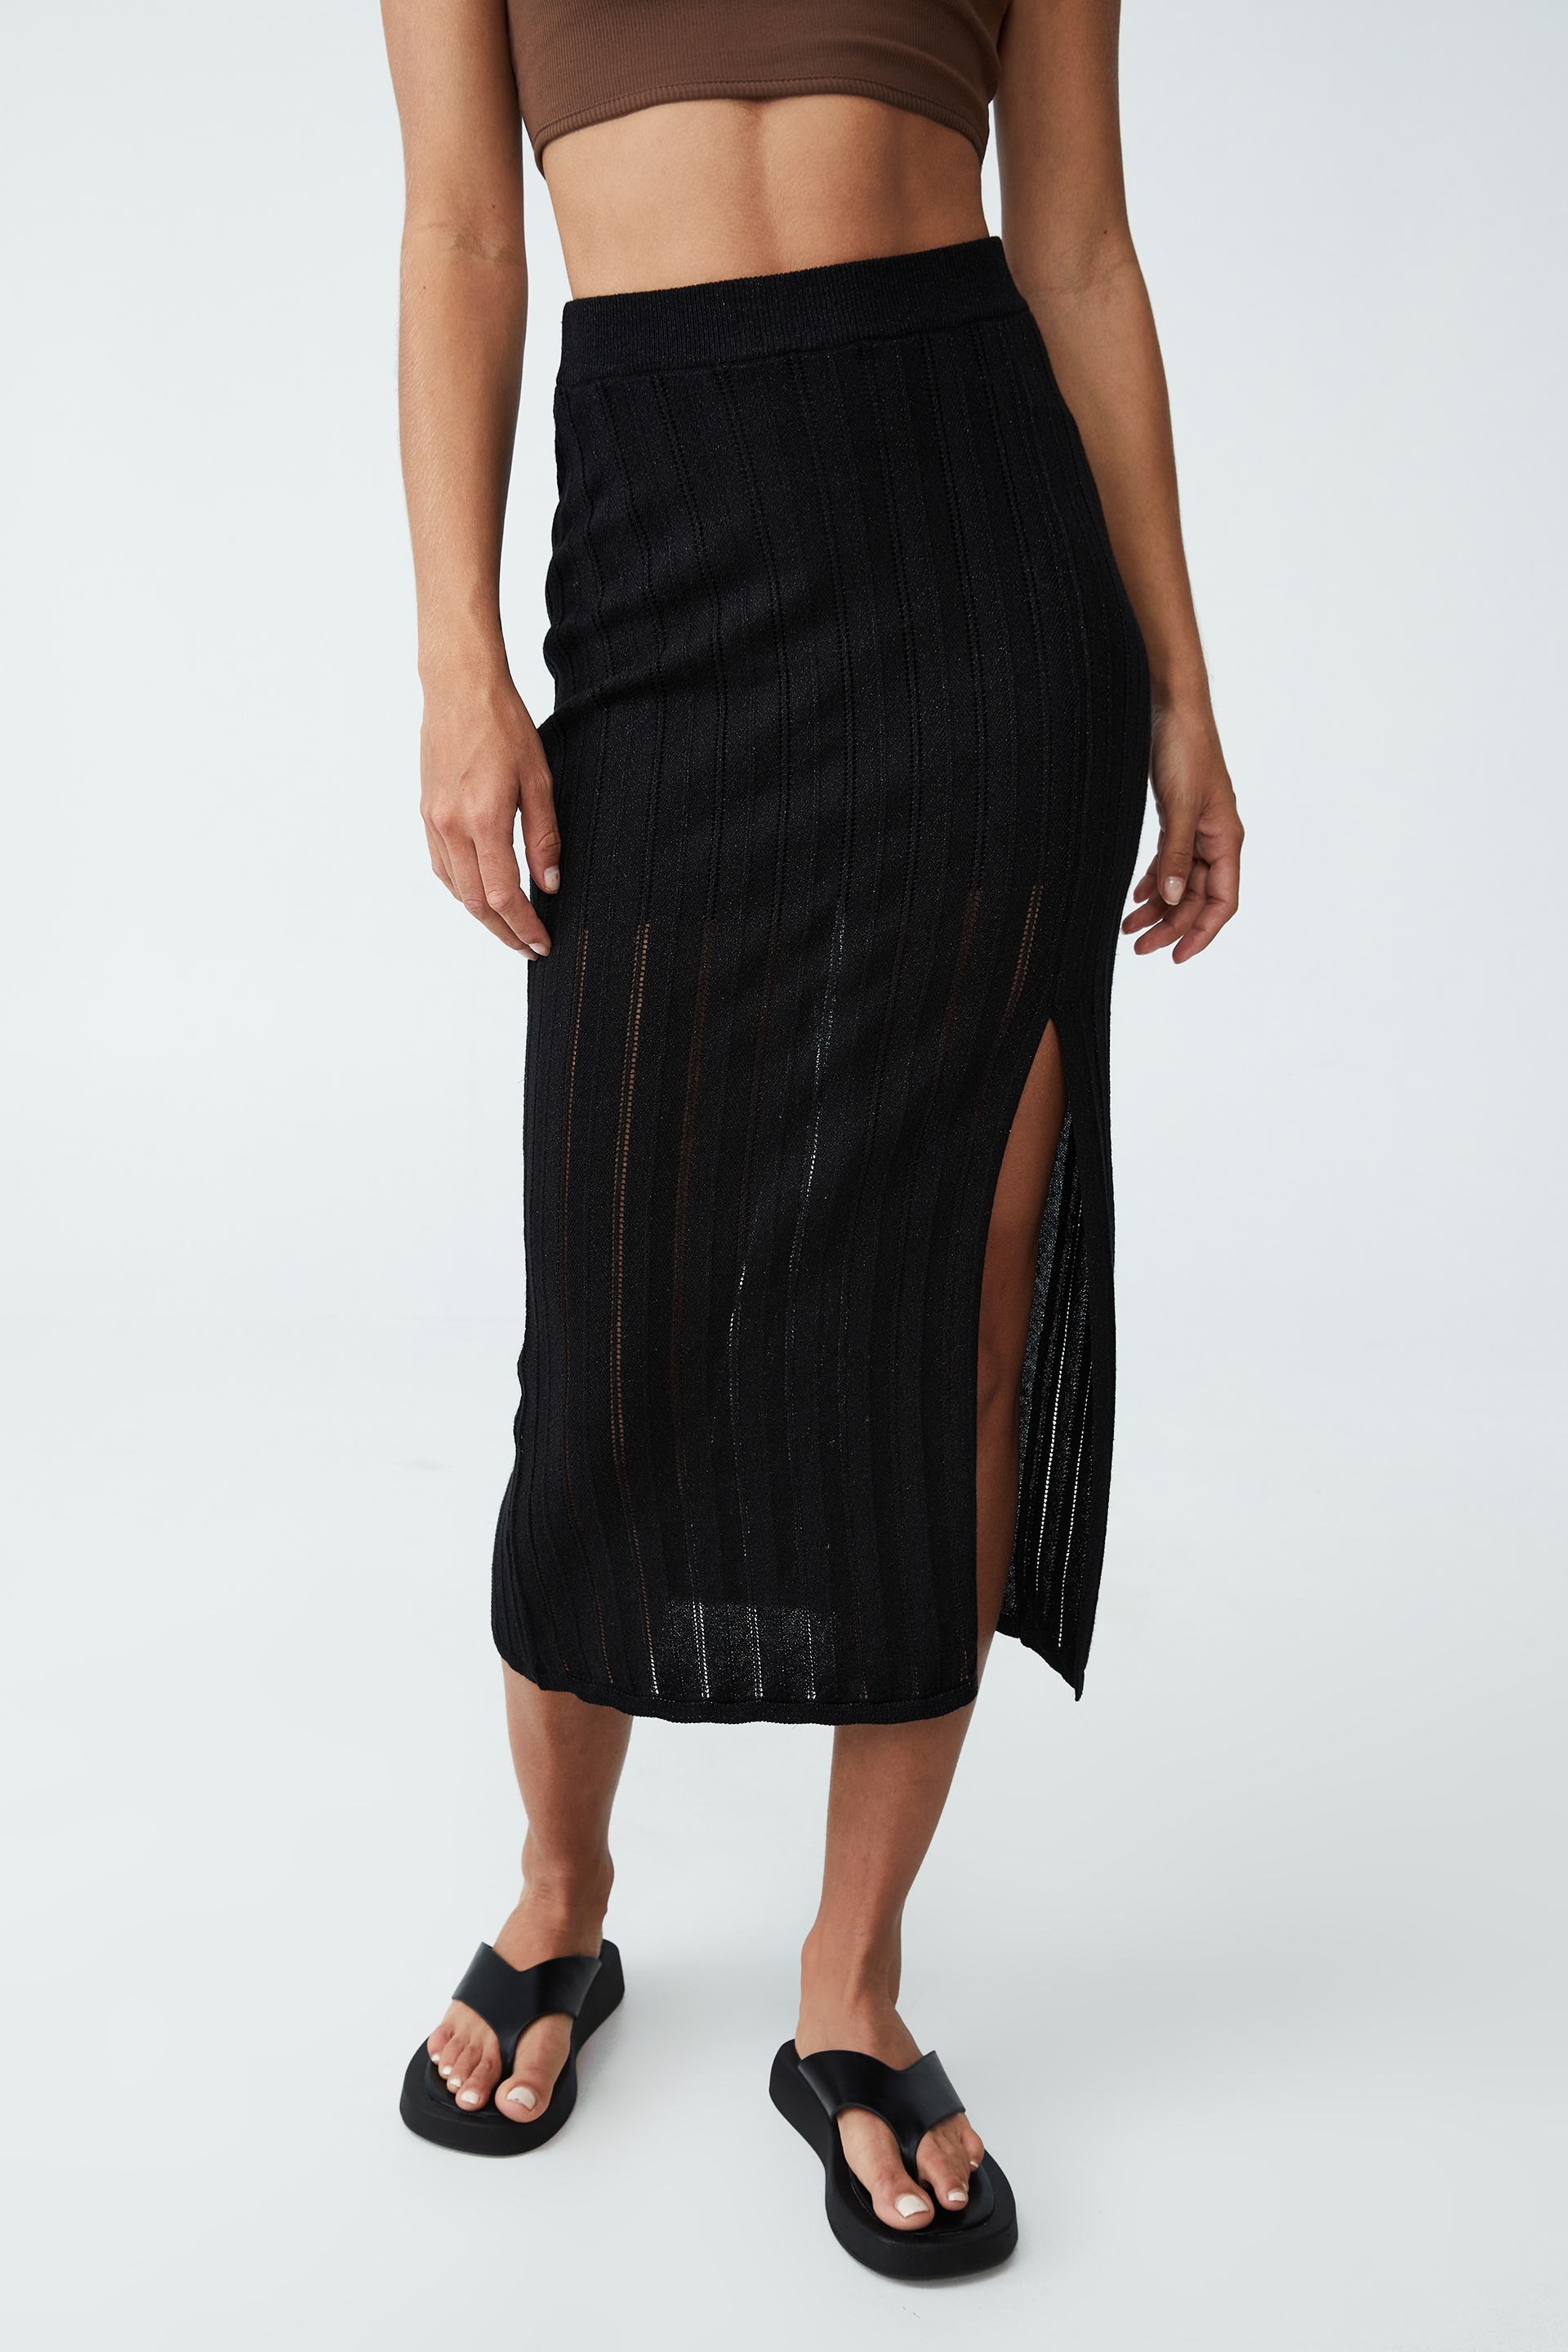 Cotton On Women - Gizelle True Knit Sparkle Midi Skirt - Black